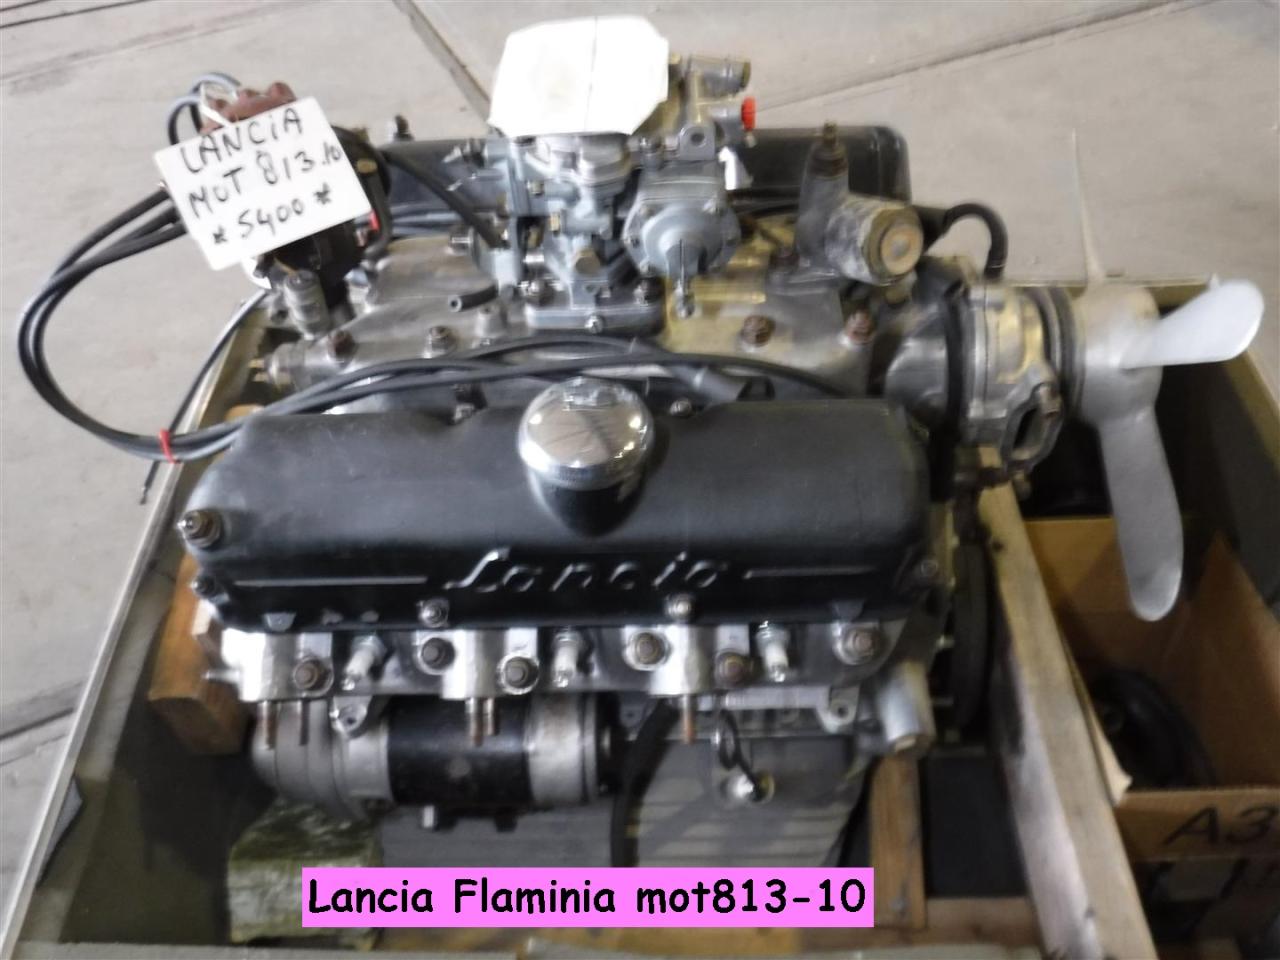 1960 Lancia Flaminia engine 813